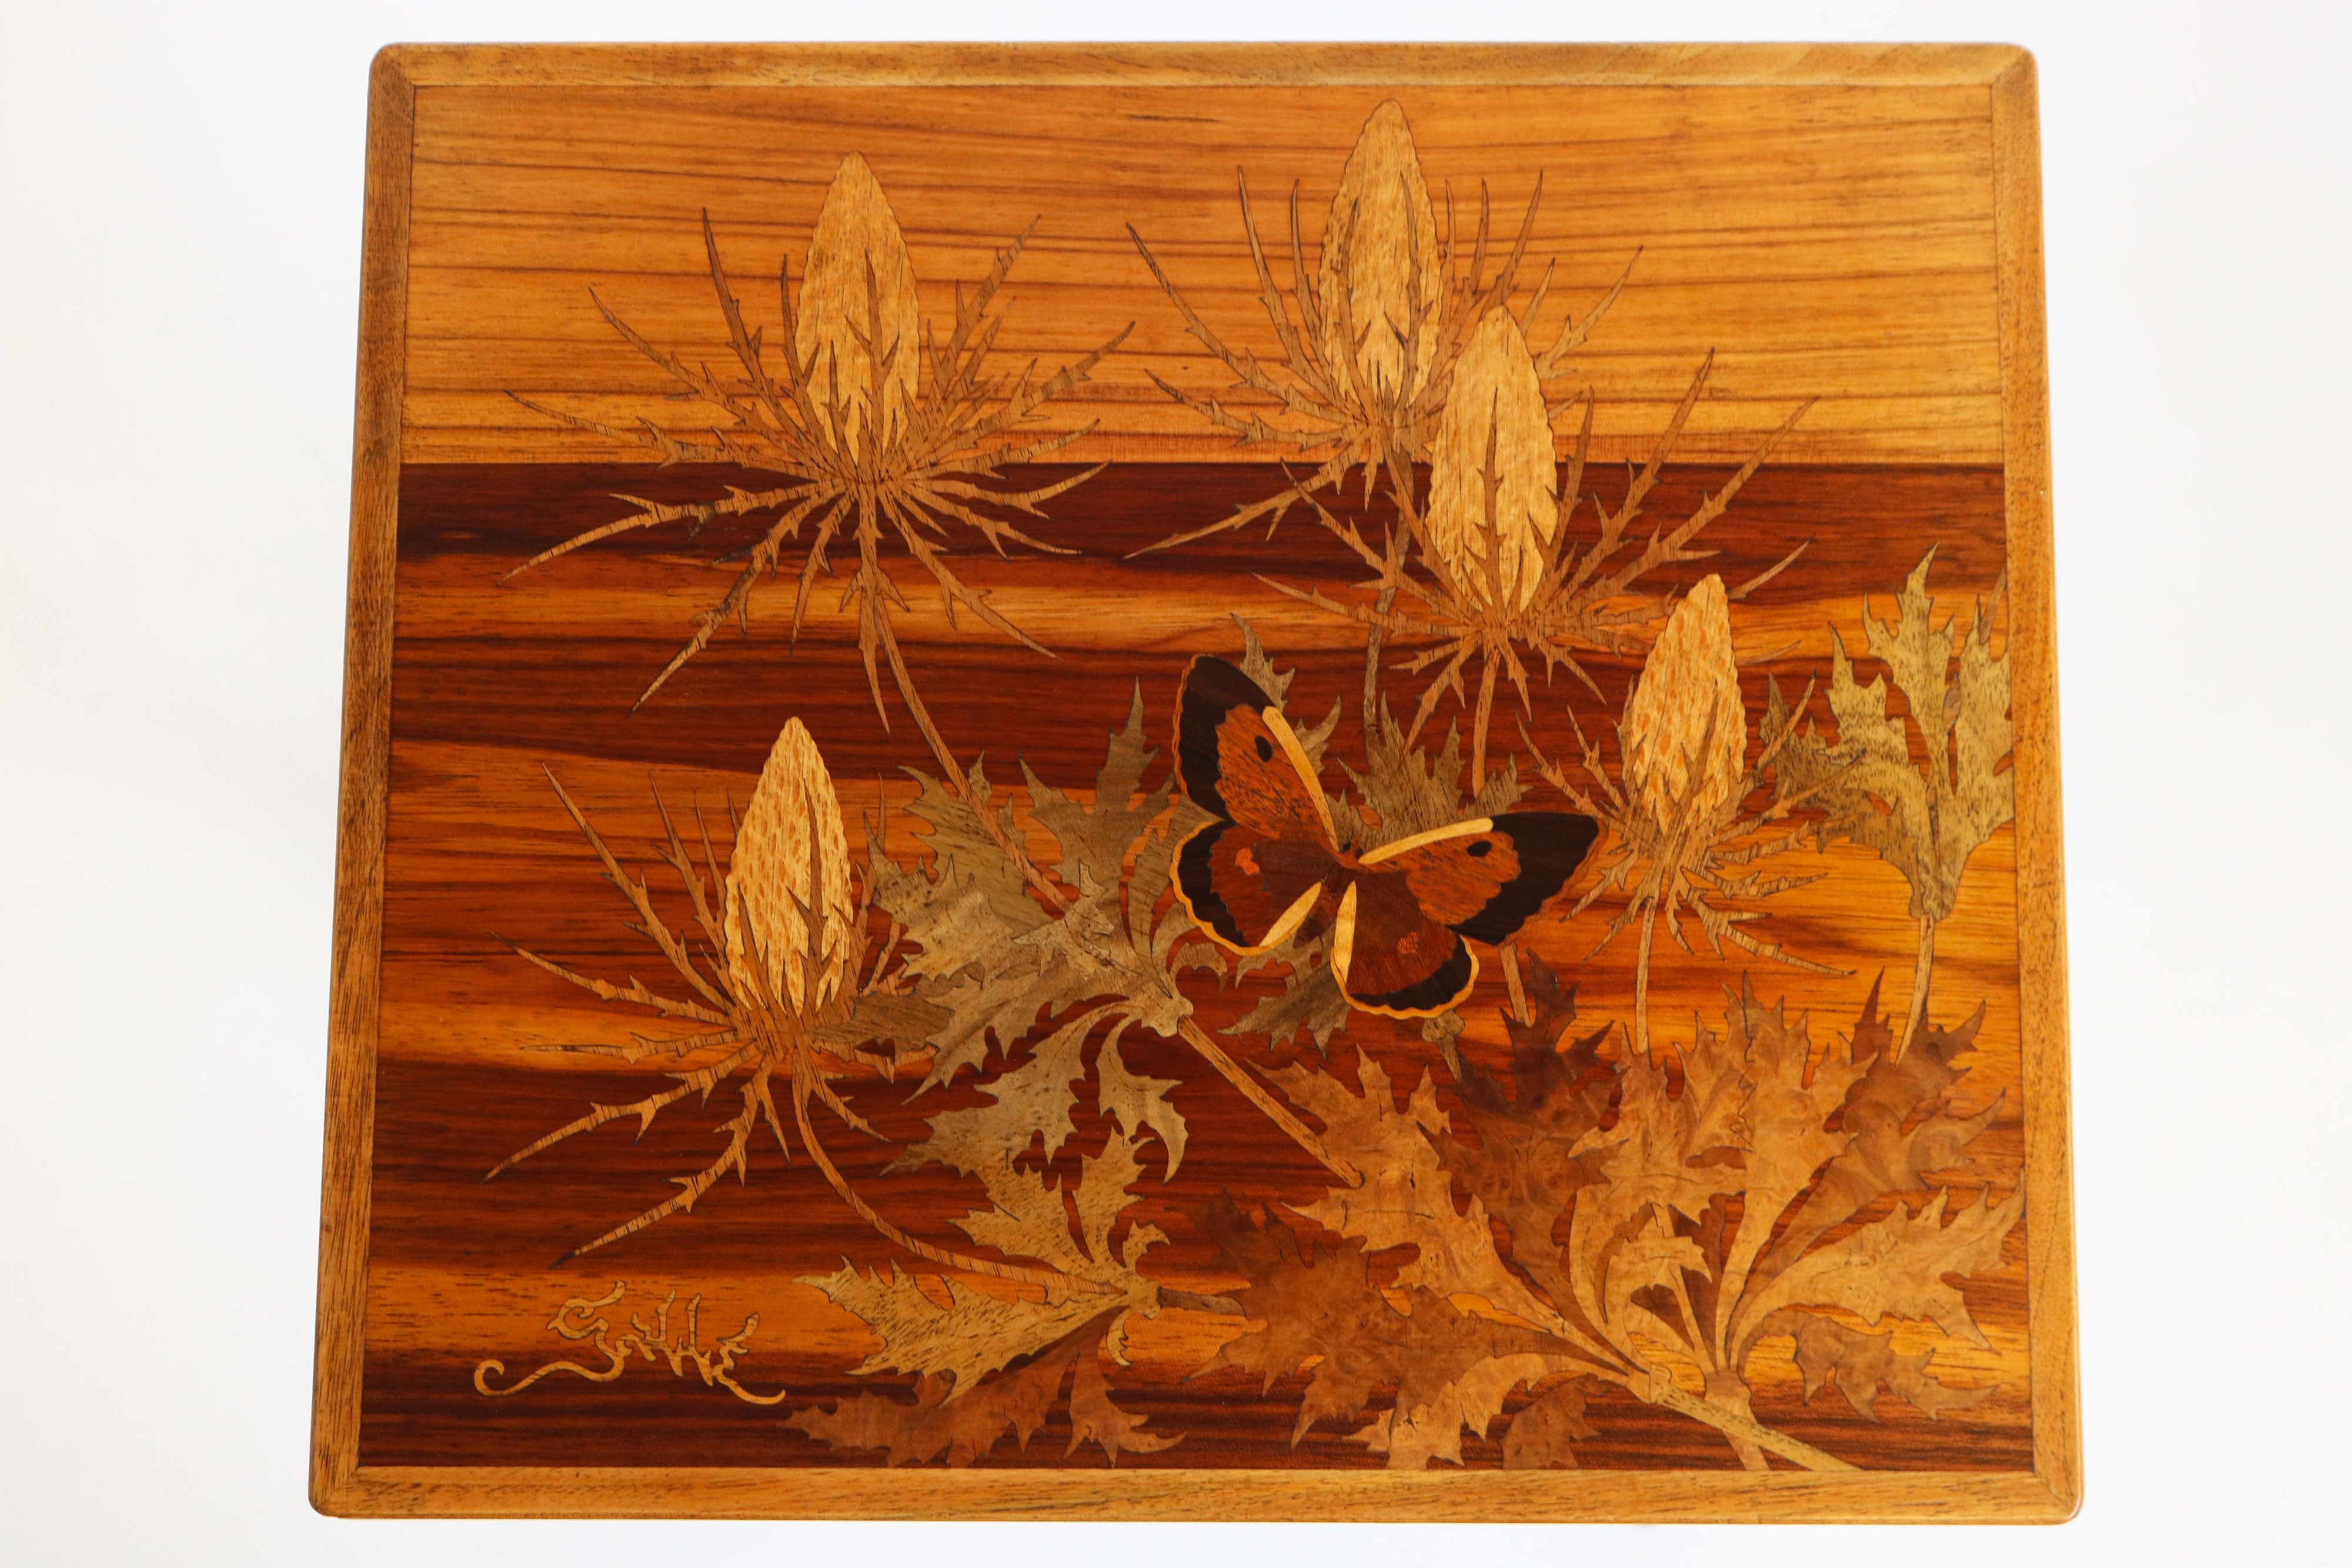 Exquisite ''Thistle'' nesting table set by Emile Gallé 1900